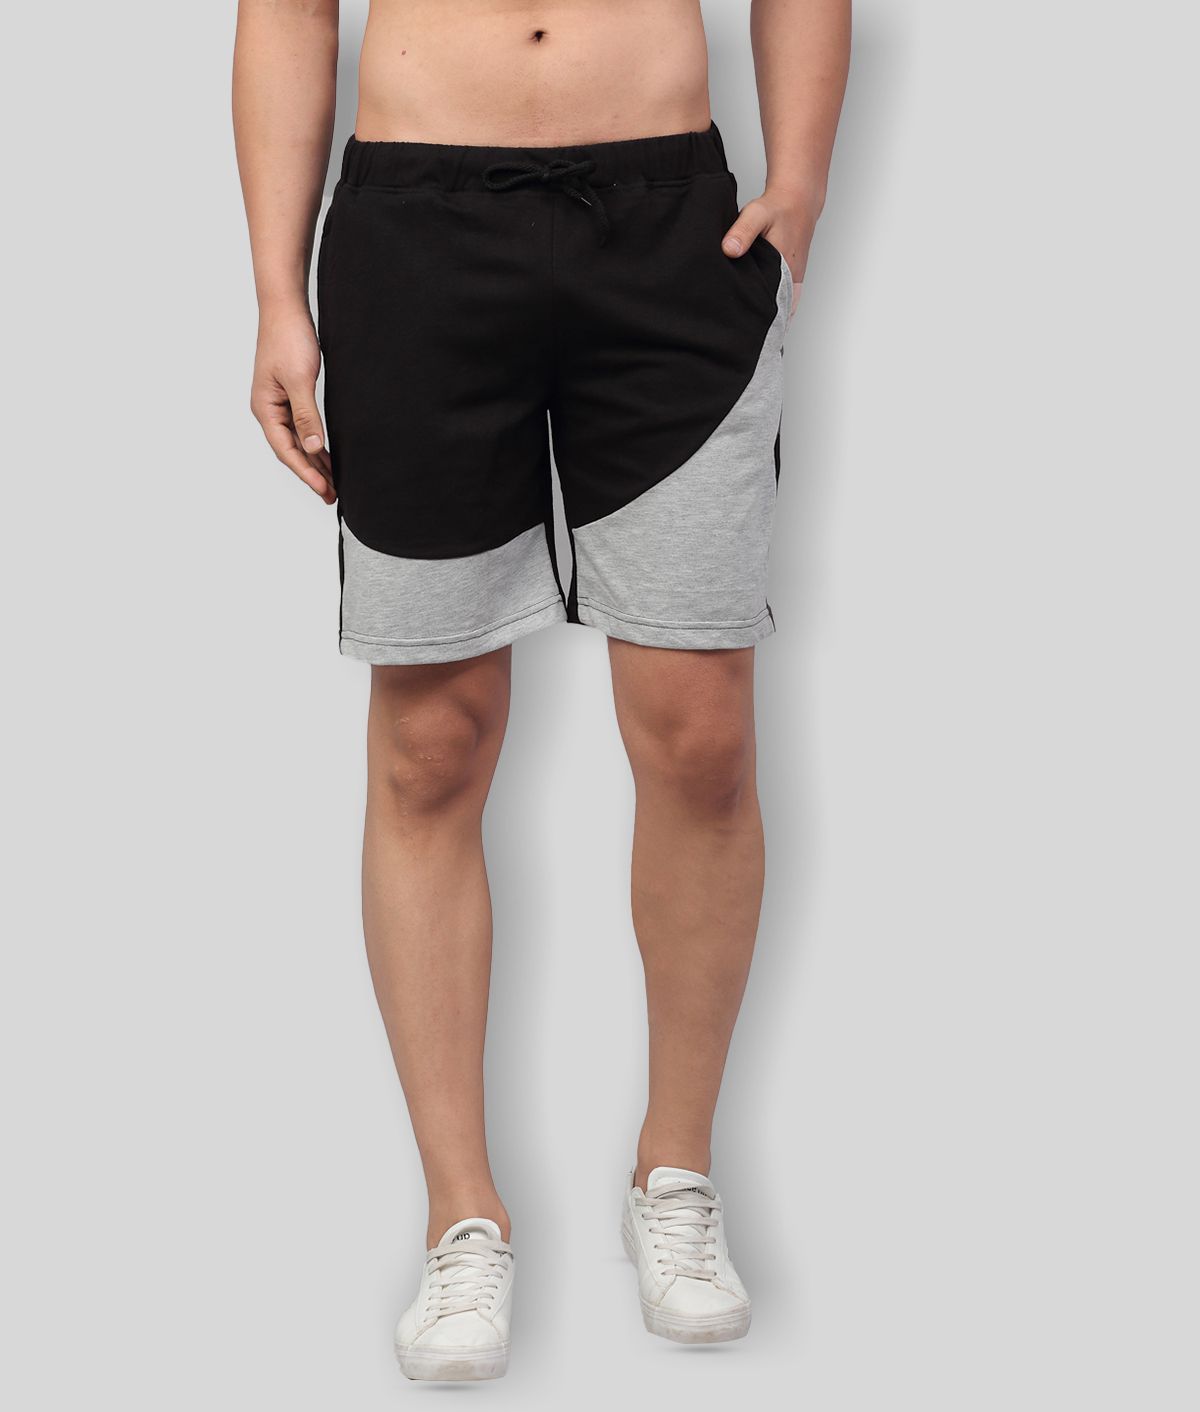 Rigo - Black Cotton Men's Shorts ( Pack of 1 )